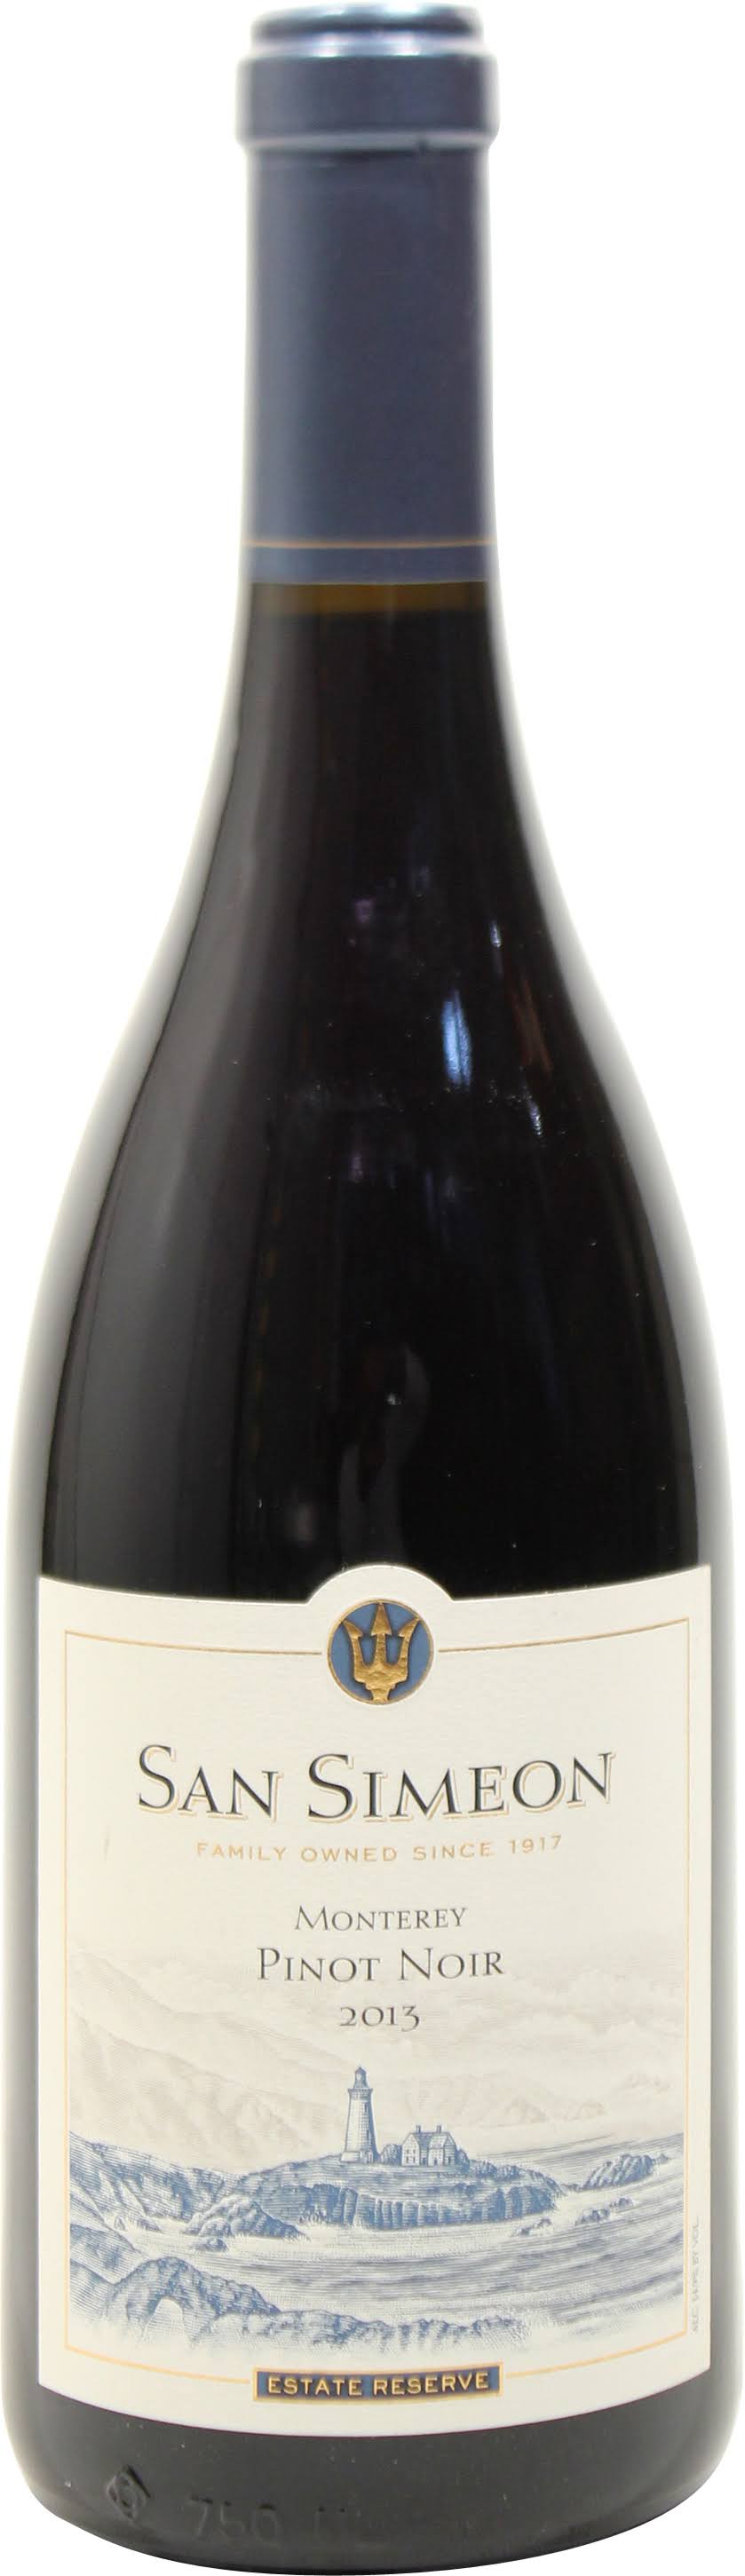 San Simeon Pinot Noir, Monterey (Vintage Varies) - 750 ml bottle